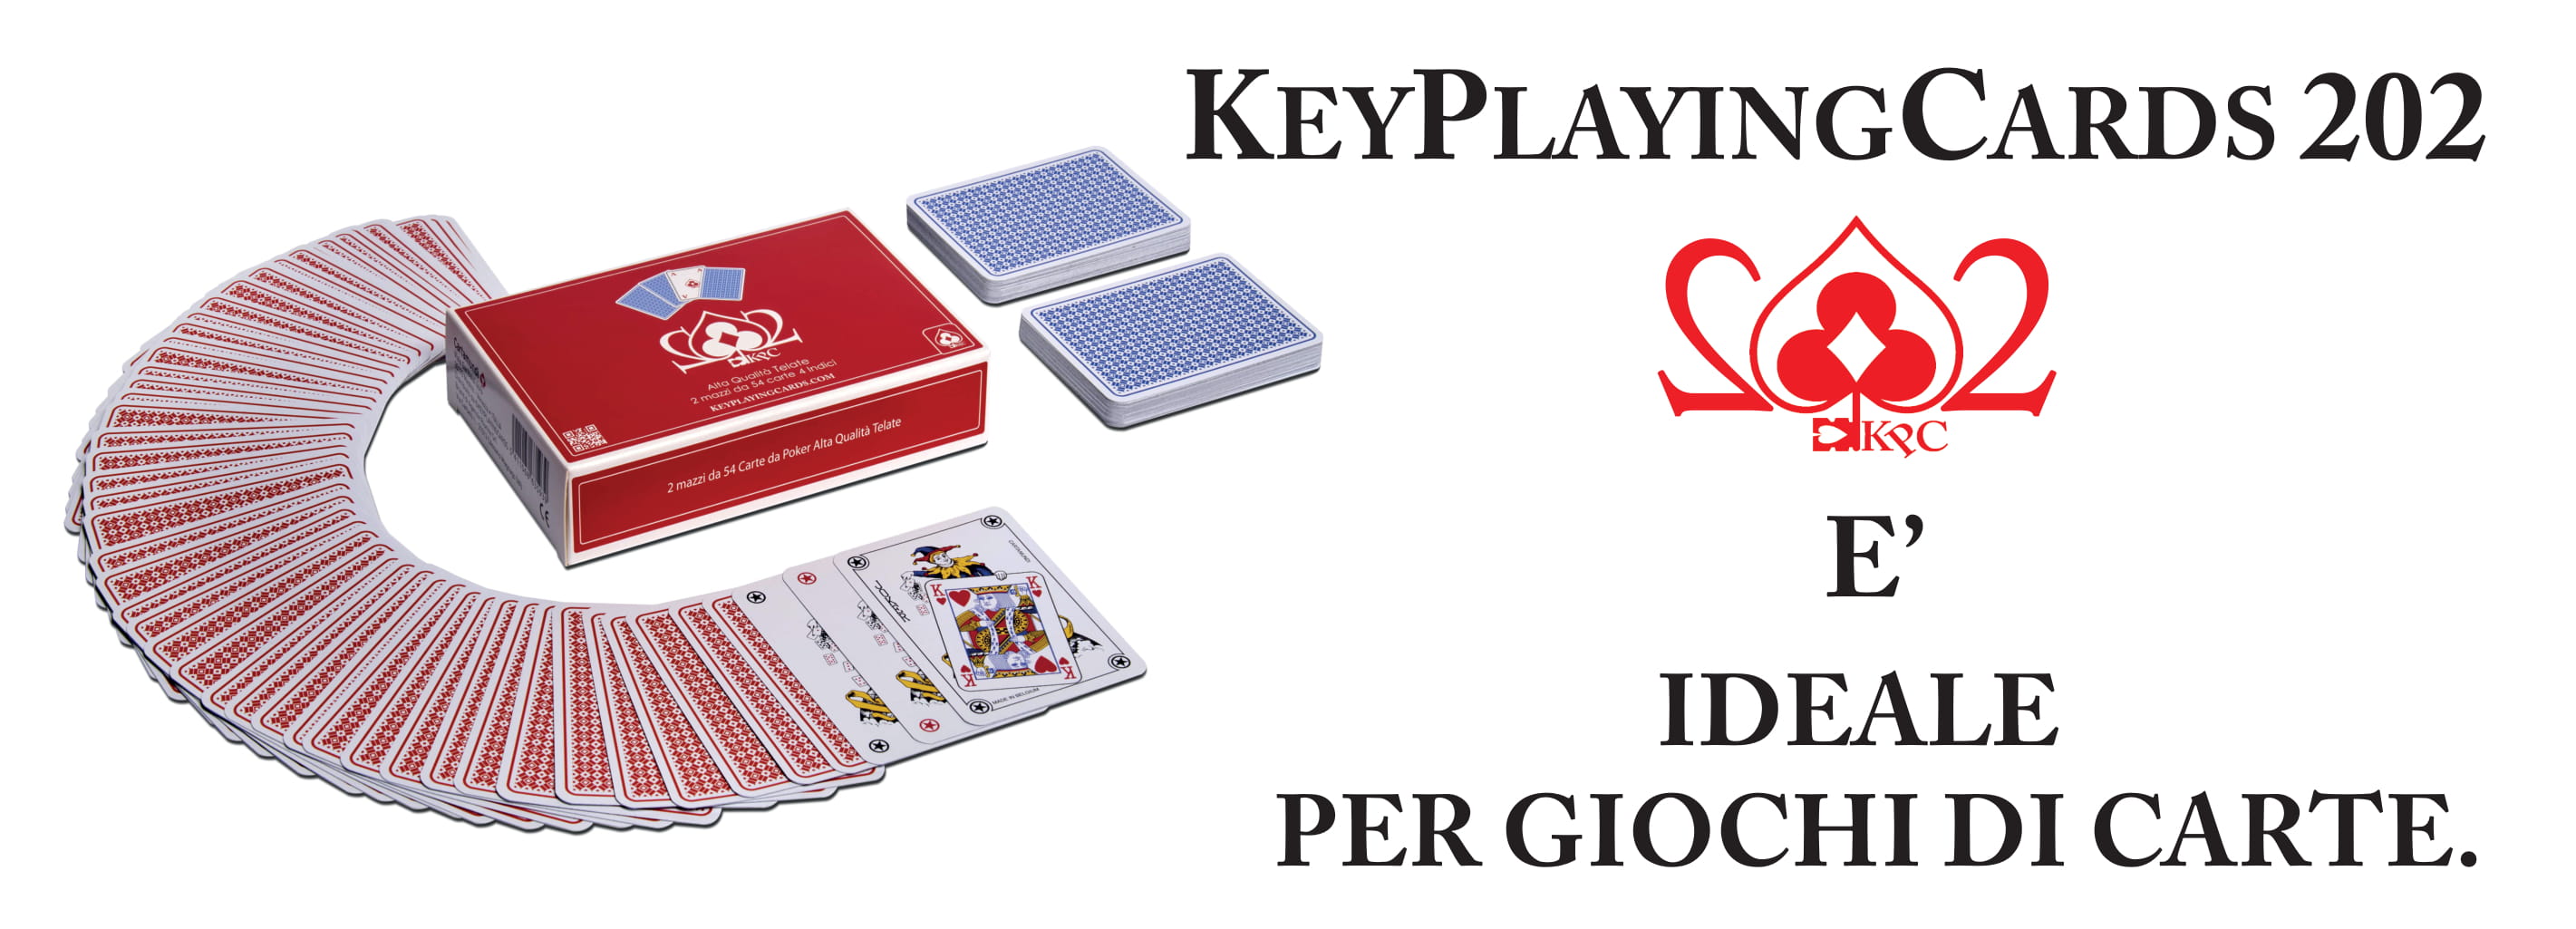 Keyplayingcards 202 - 2